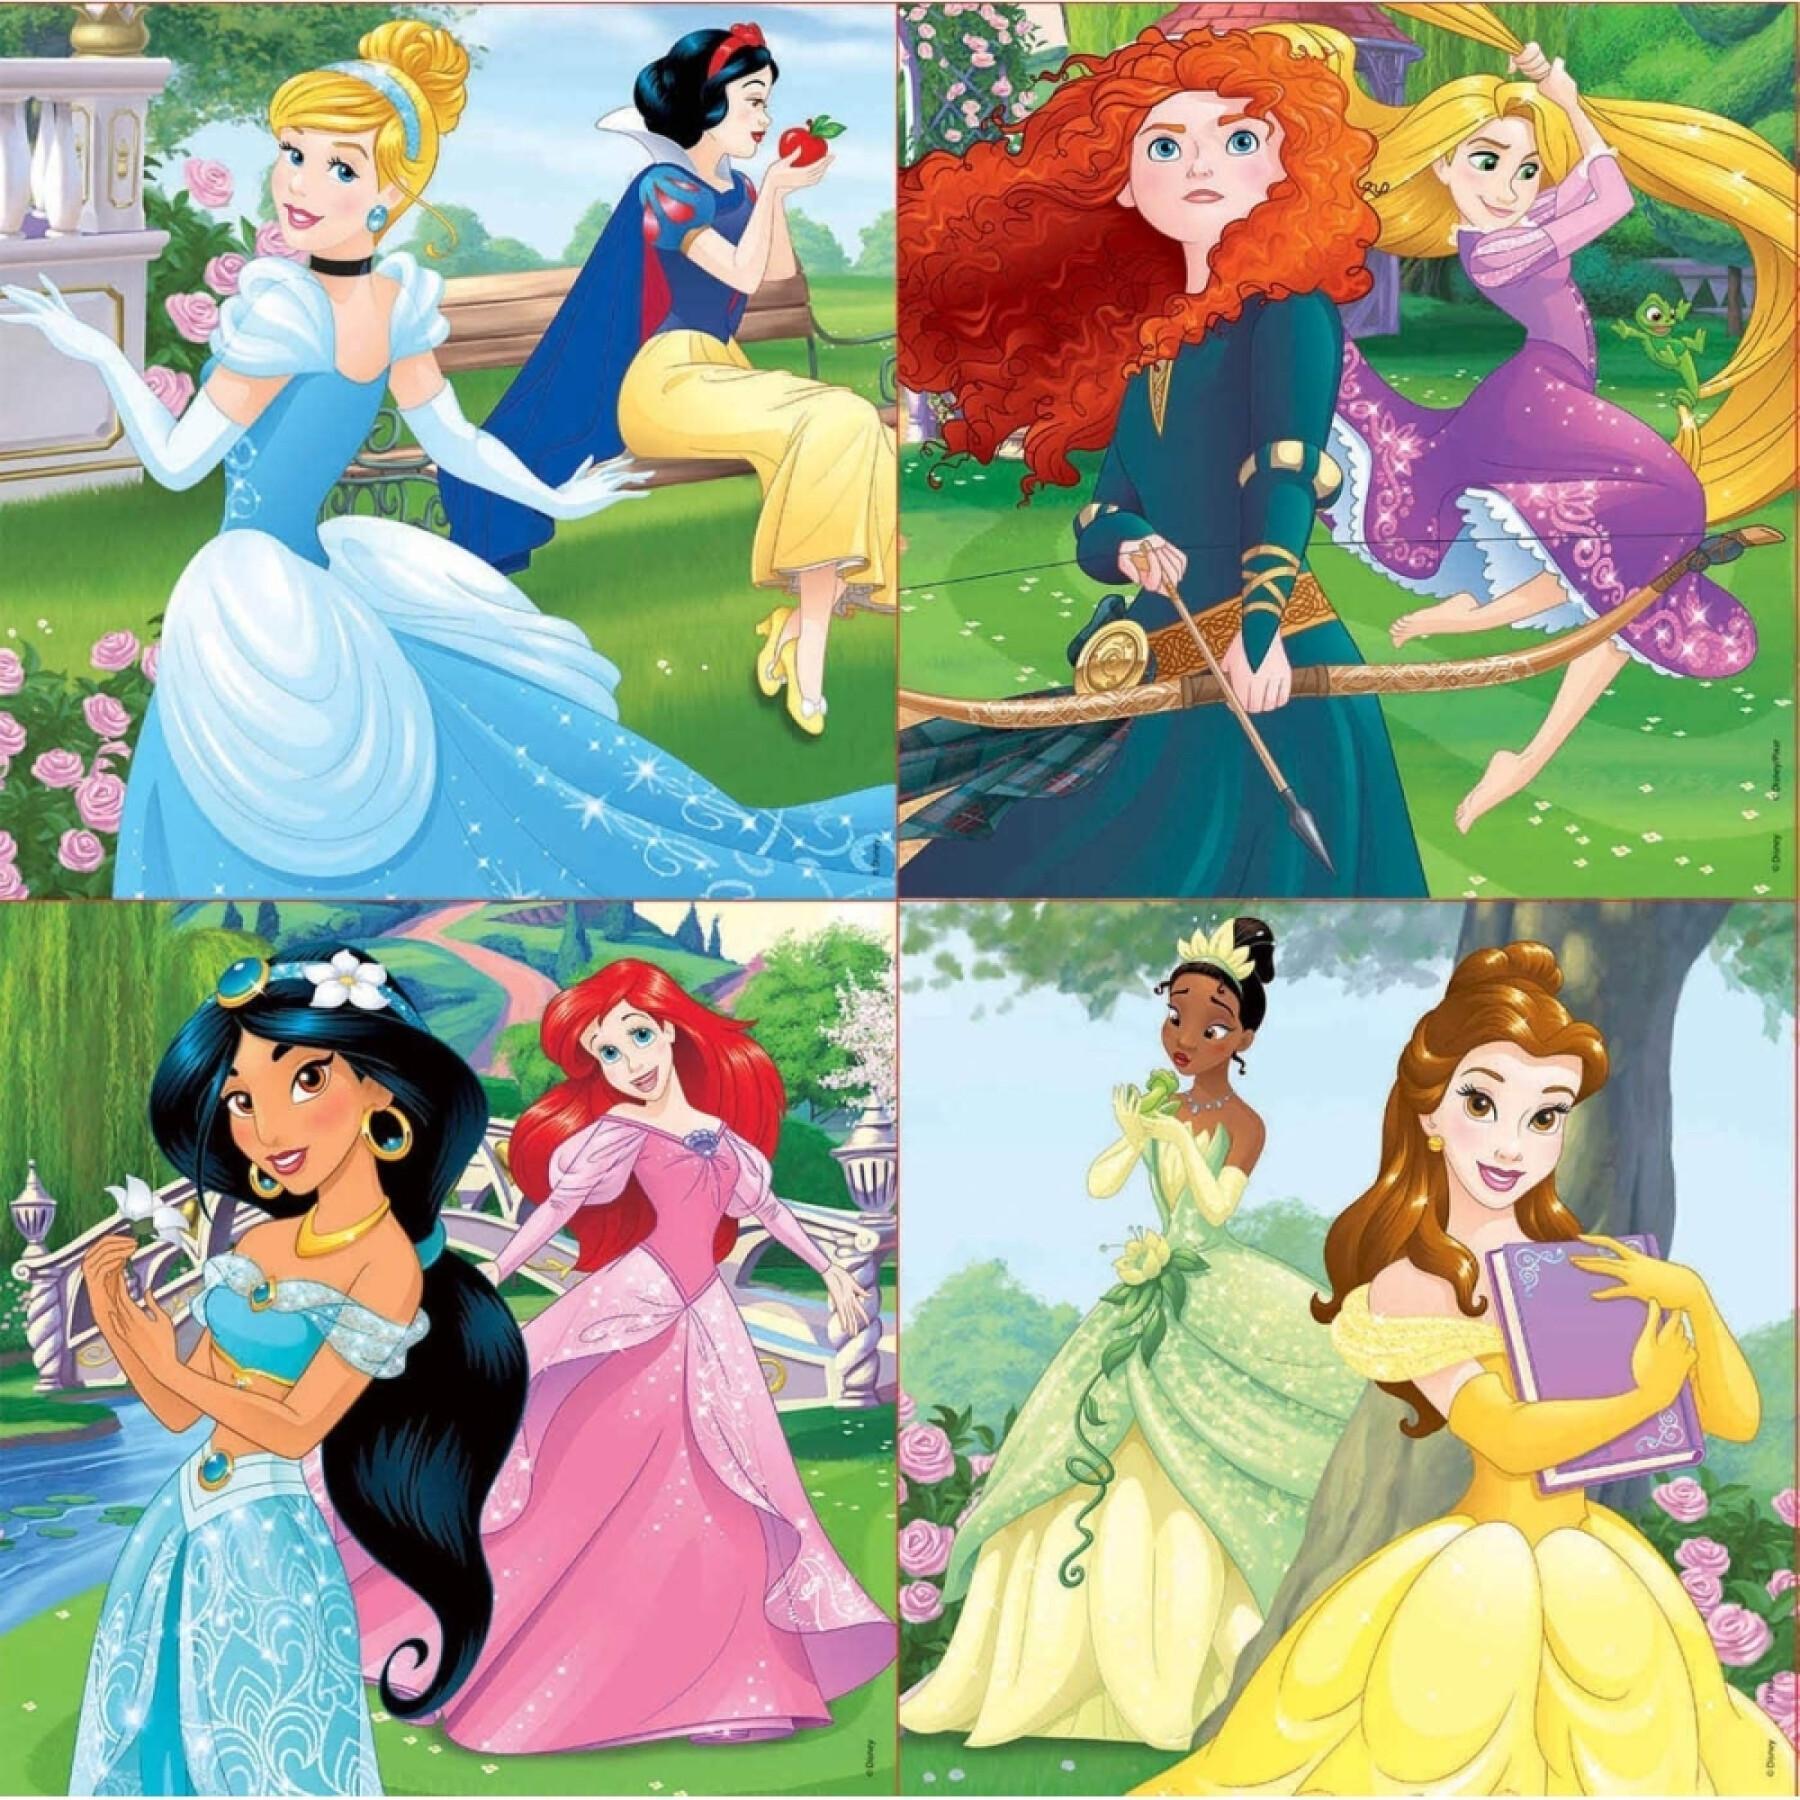 Progressive puzzle Disney Princess